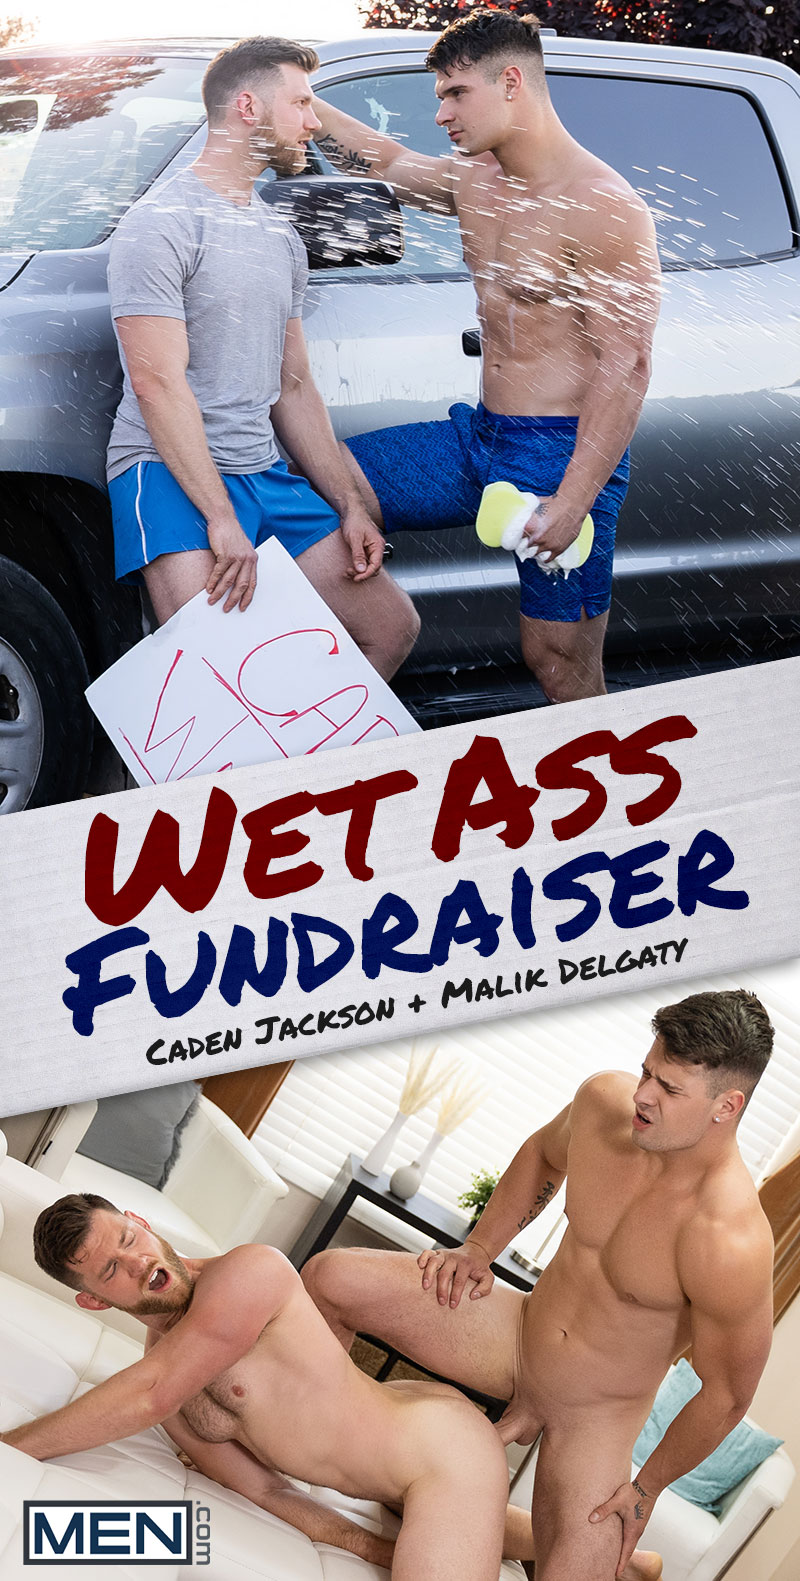 Caden Jackson Malik Delgaty Wet Ass Fundraiser Men